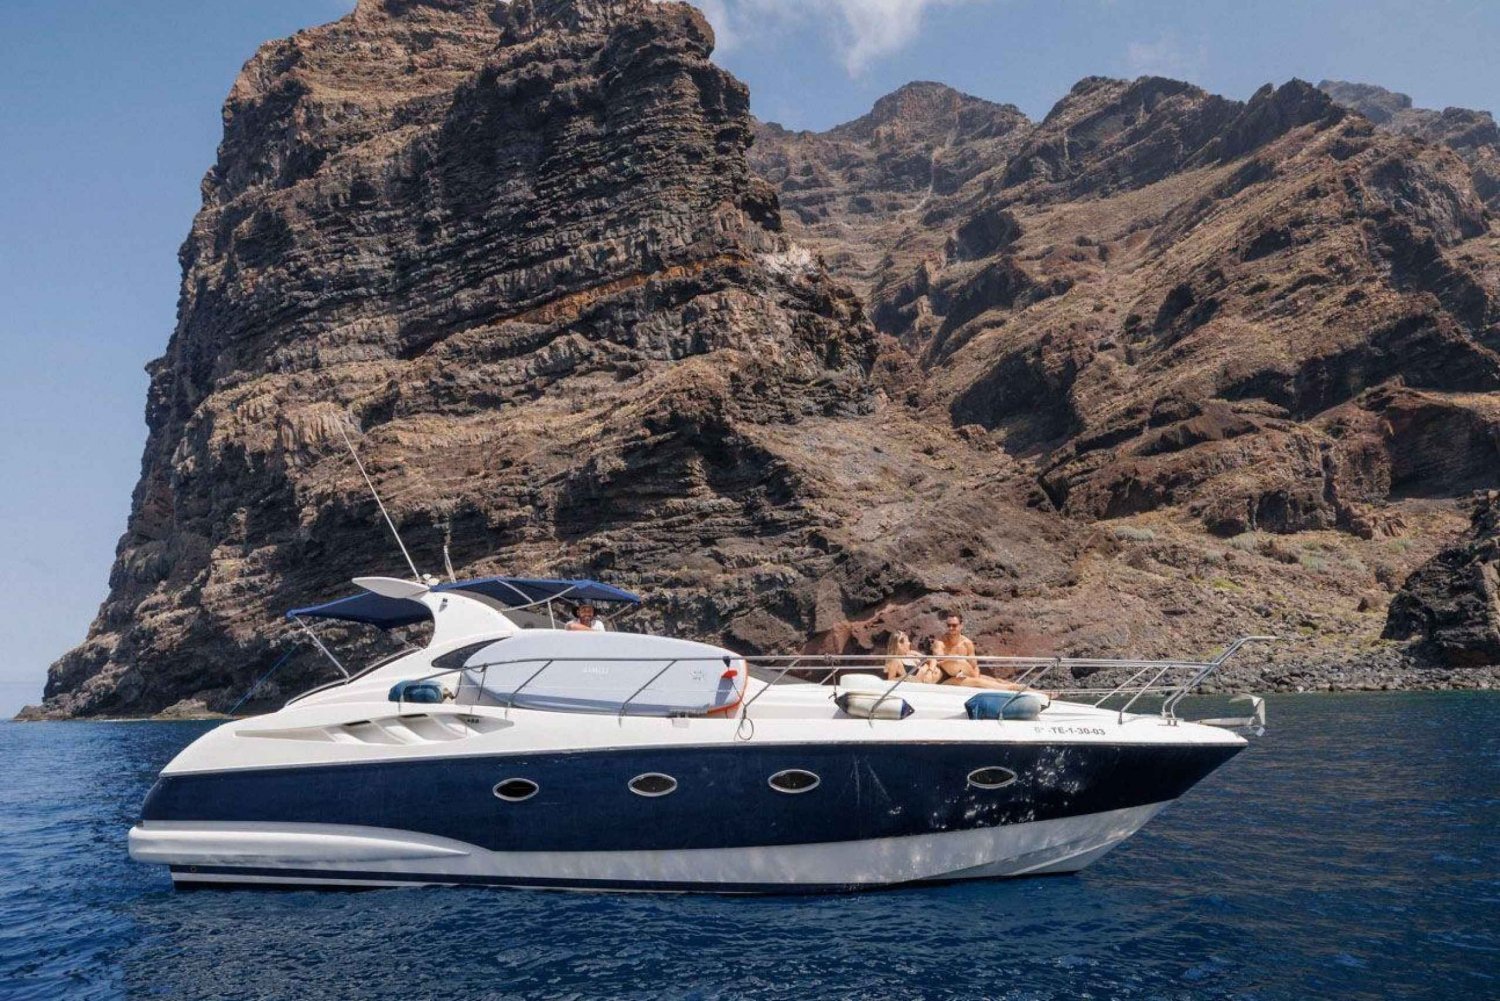 Costa Adeje, Tenerife: Private charter in luxury yacht